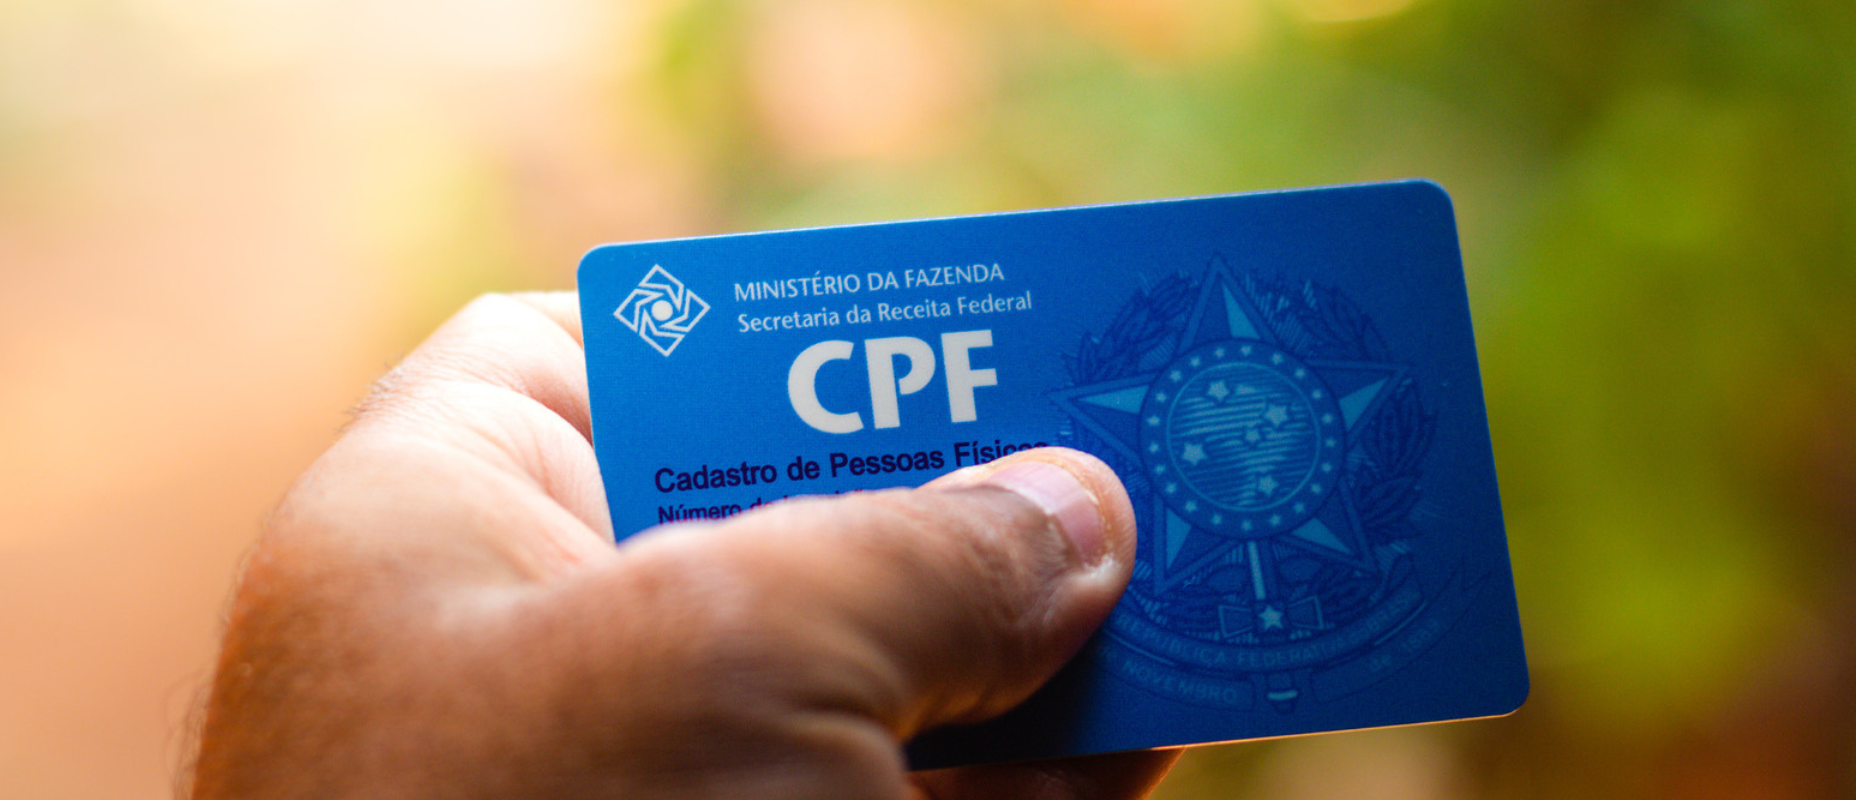 O que significa CPF? 